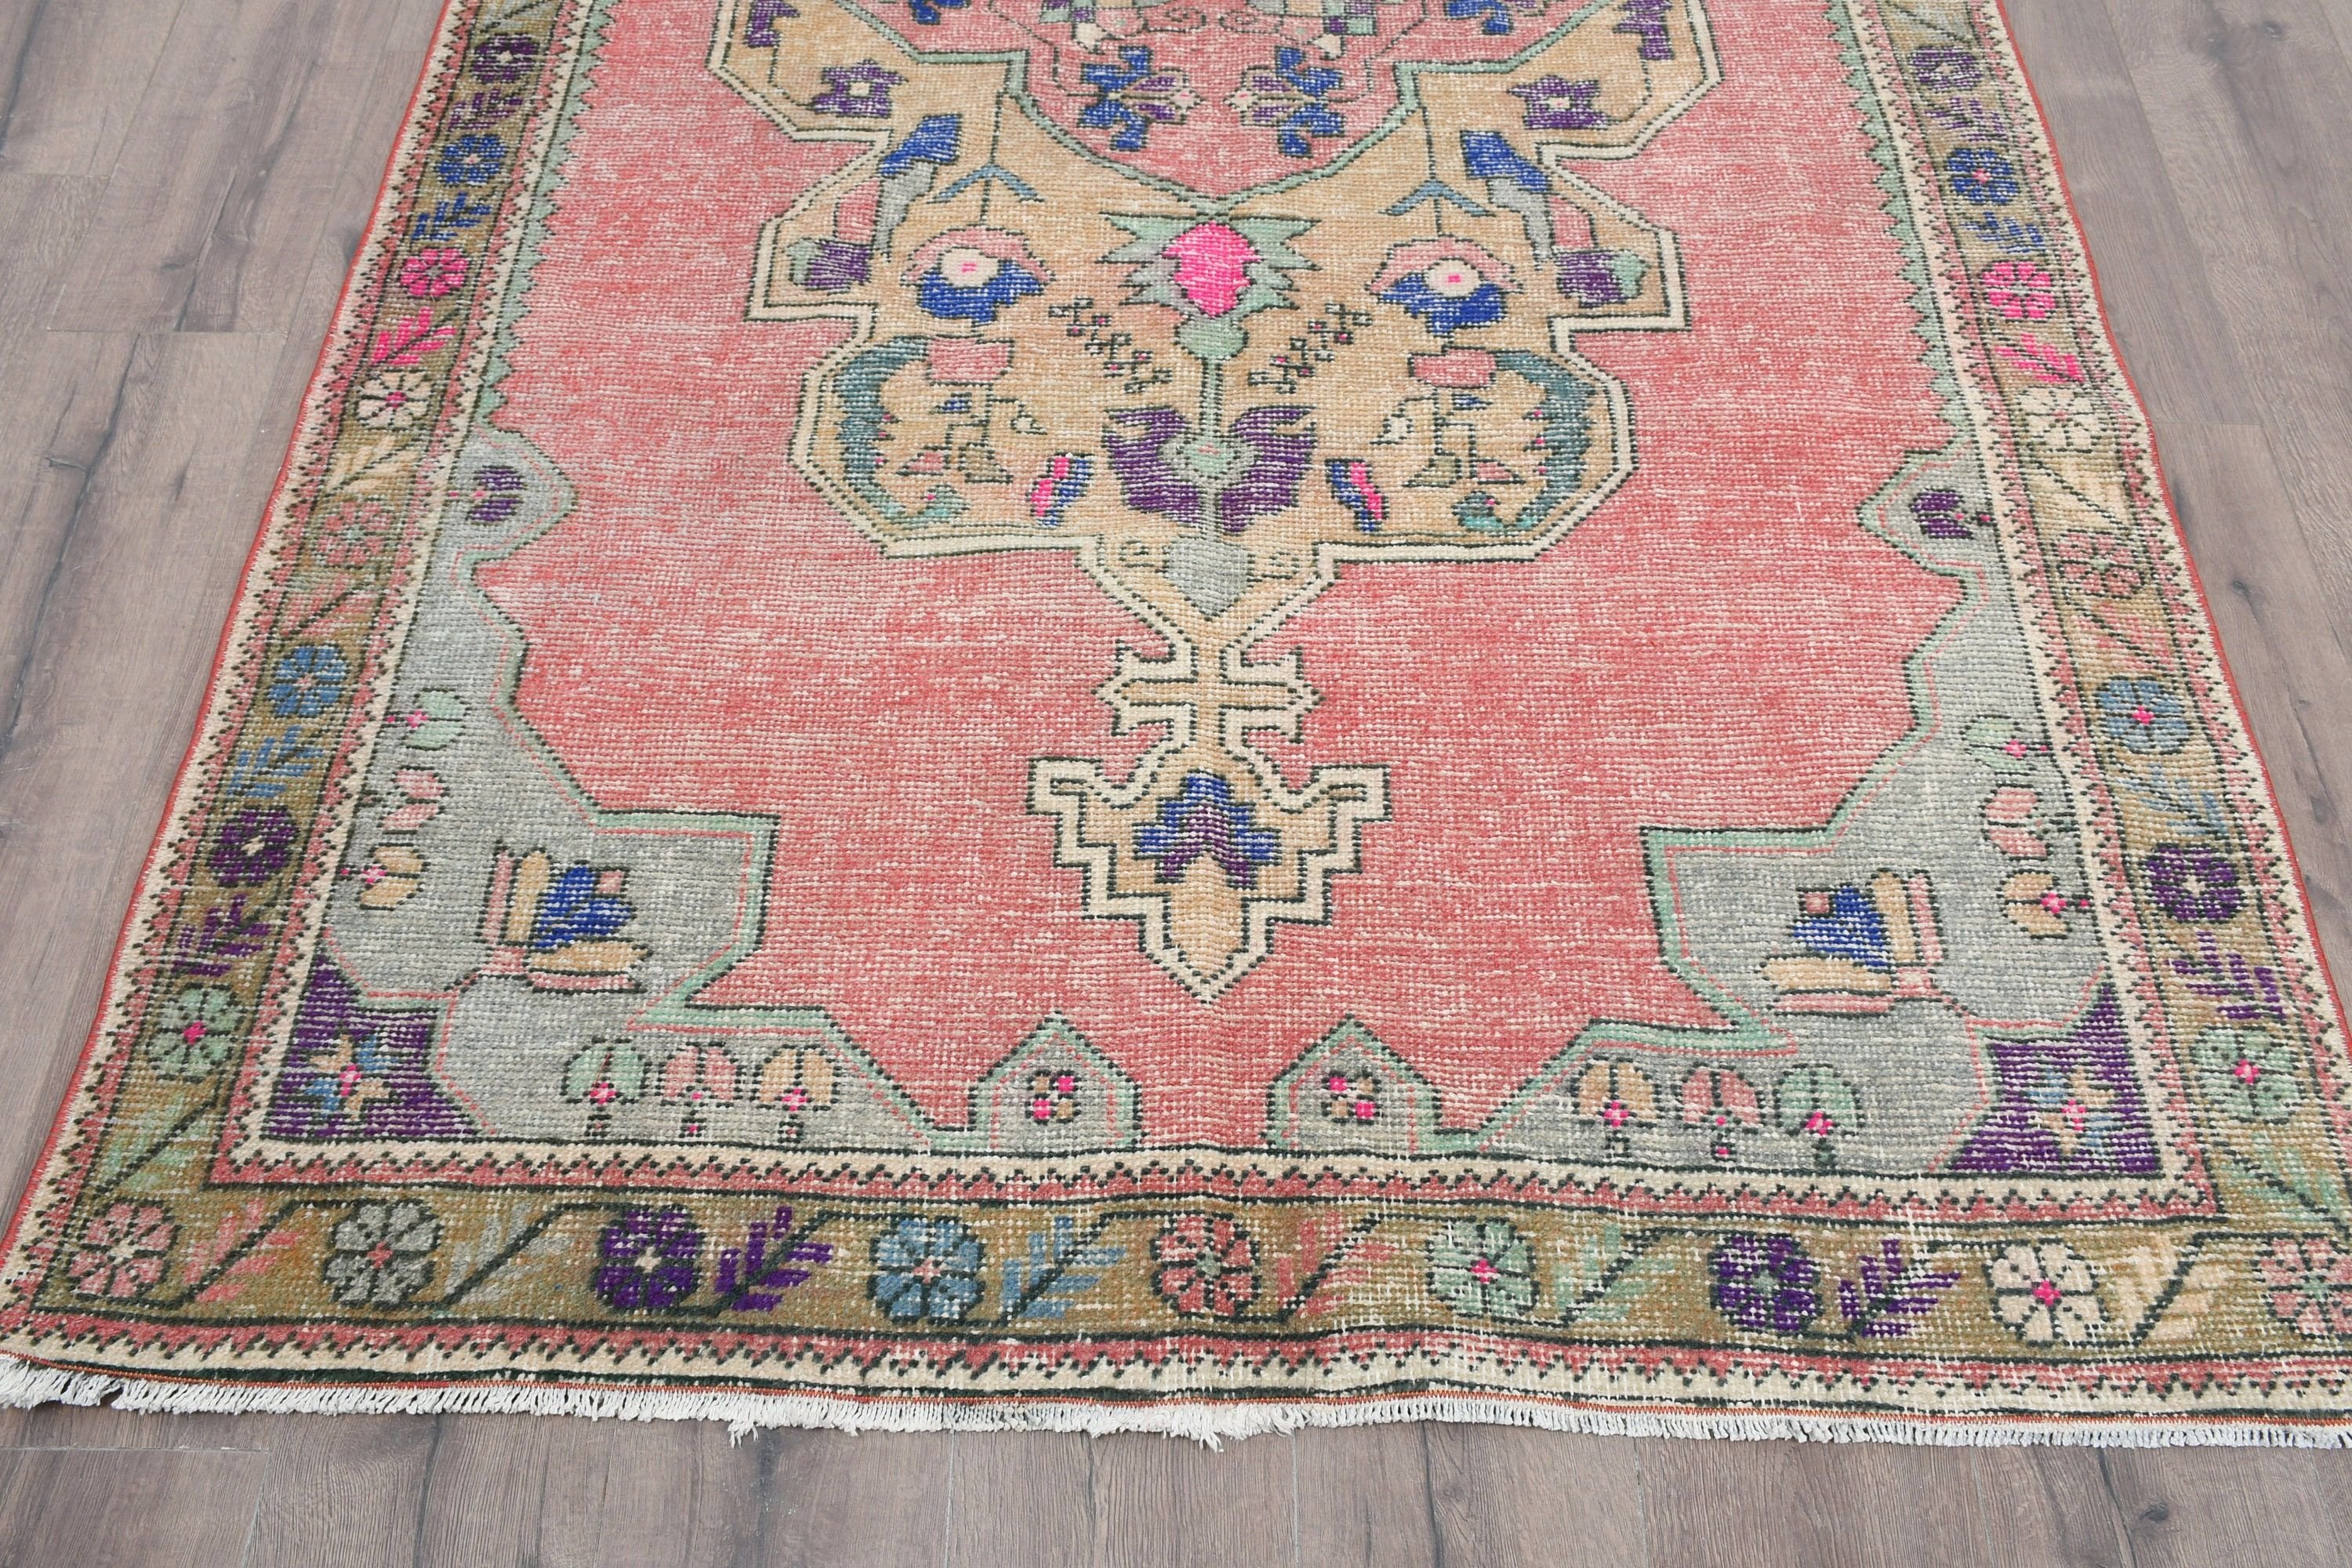 Salon Rug, Pink Moroccan Rugs, Vintage Rug, Home Decor Rug, Turkish Rugs, Office Rug, Living Room Rugs, Floor Rug, 4.7x8.8 ft Large Rug